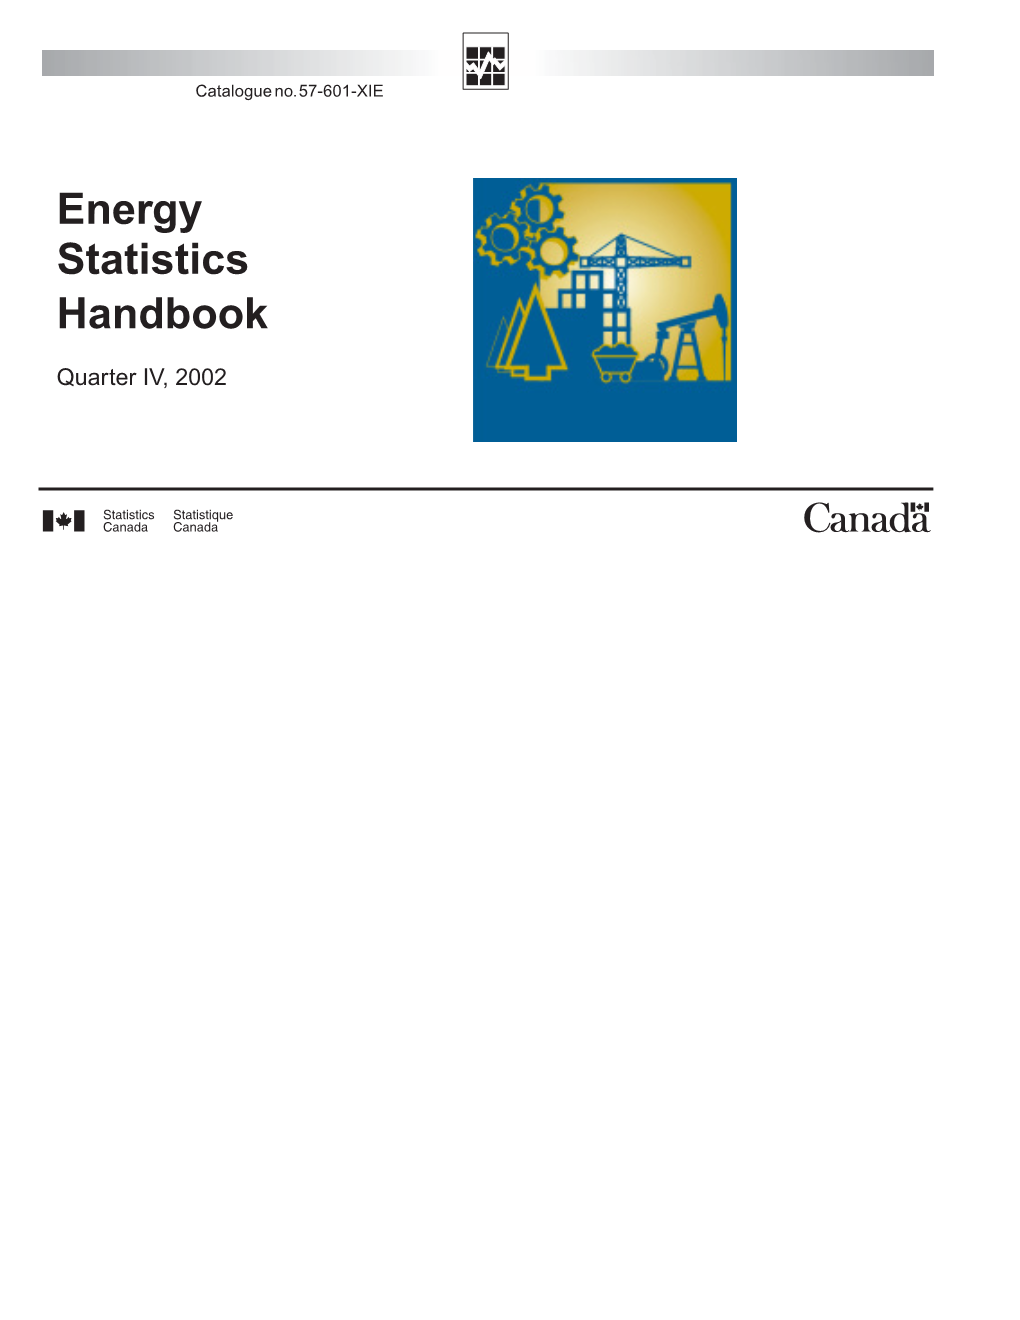 Energy Statistics Handbook